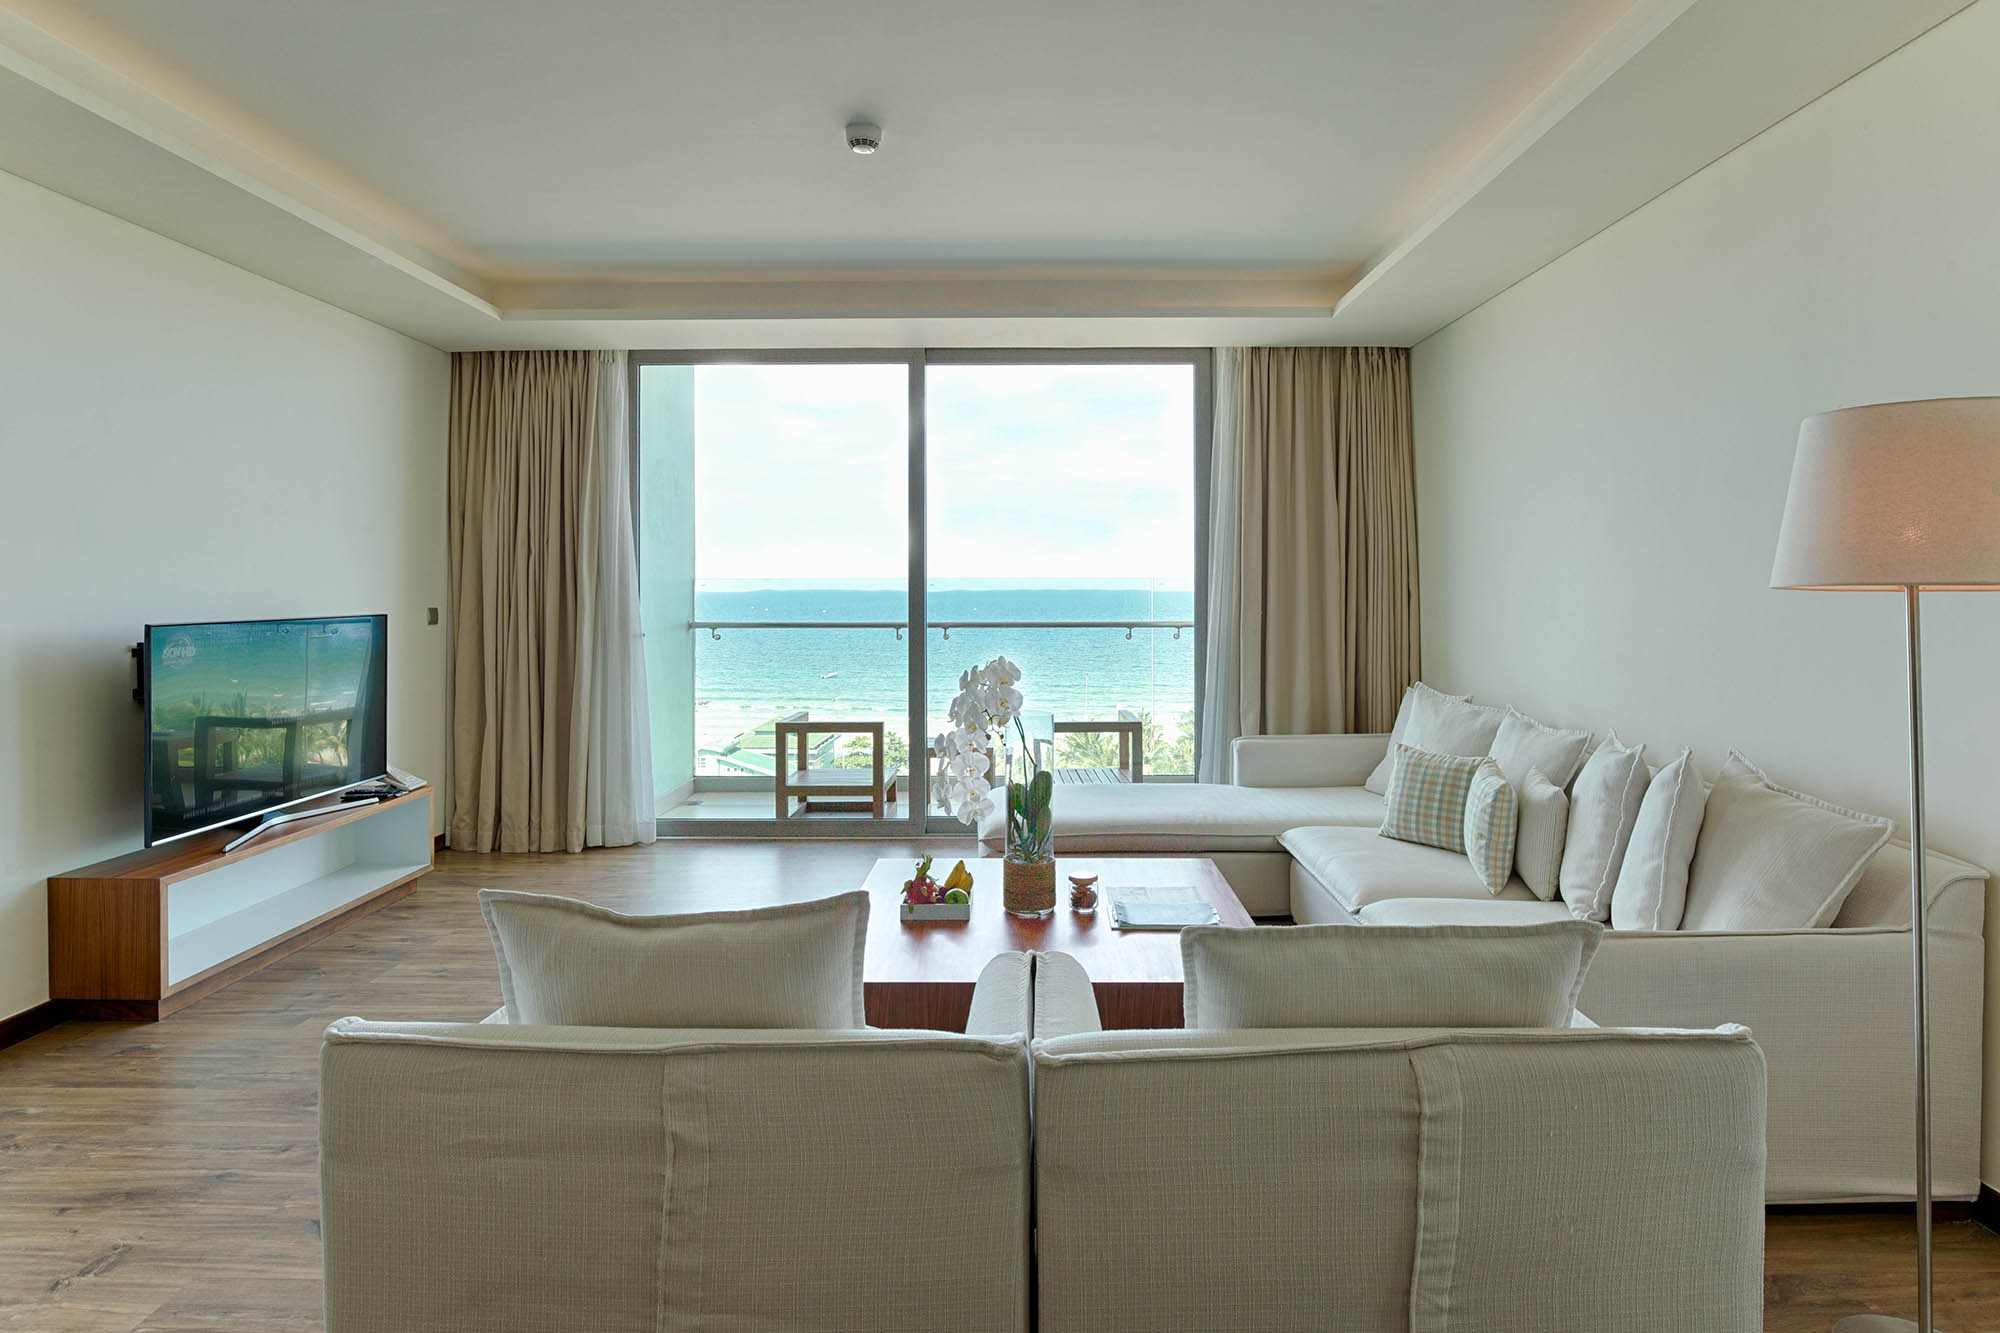 Highlight Plus Apartment A La Carte Danang Beach Hotel 200 Vo Nguyen Giap Danang Fantasticity Com 02